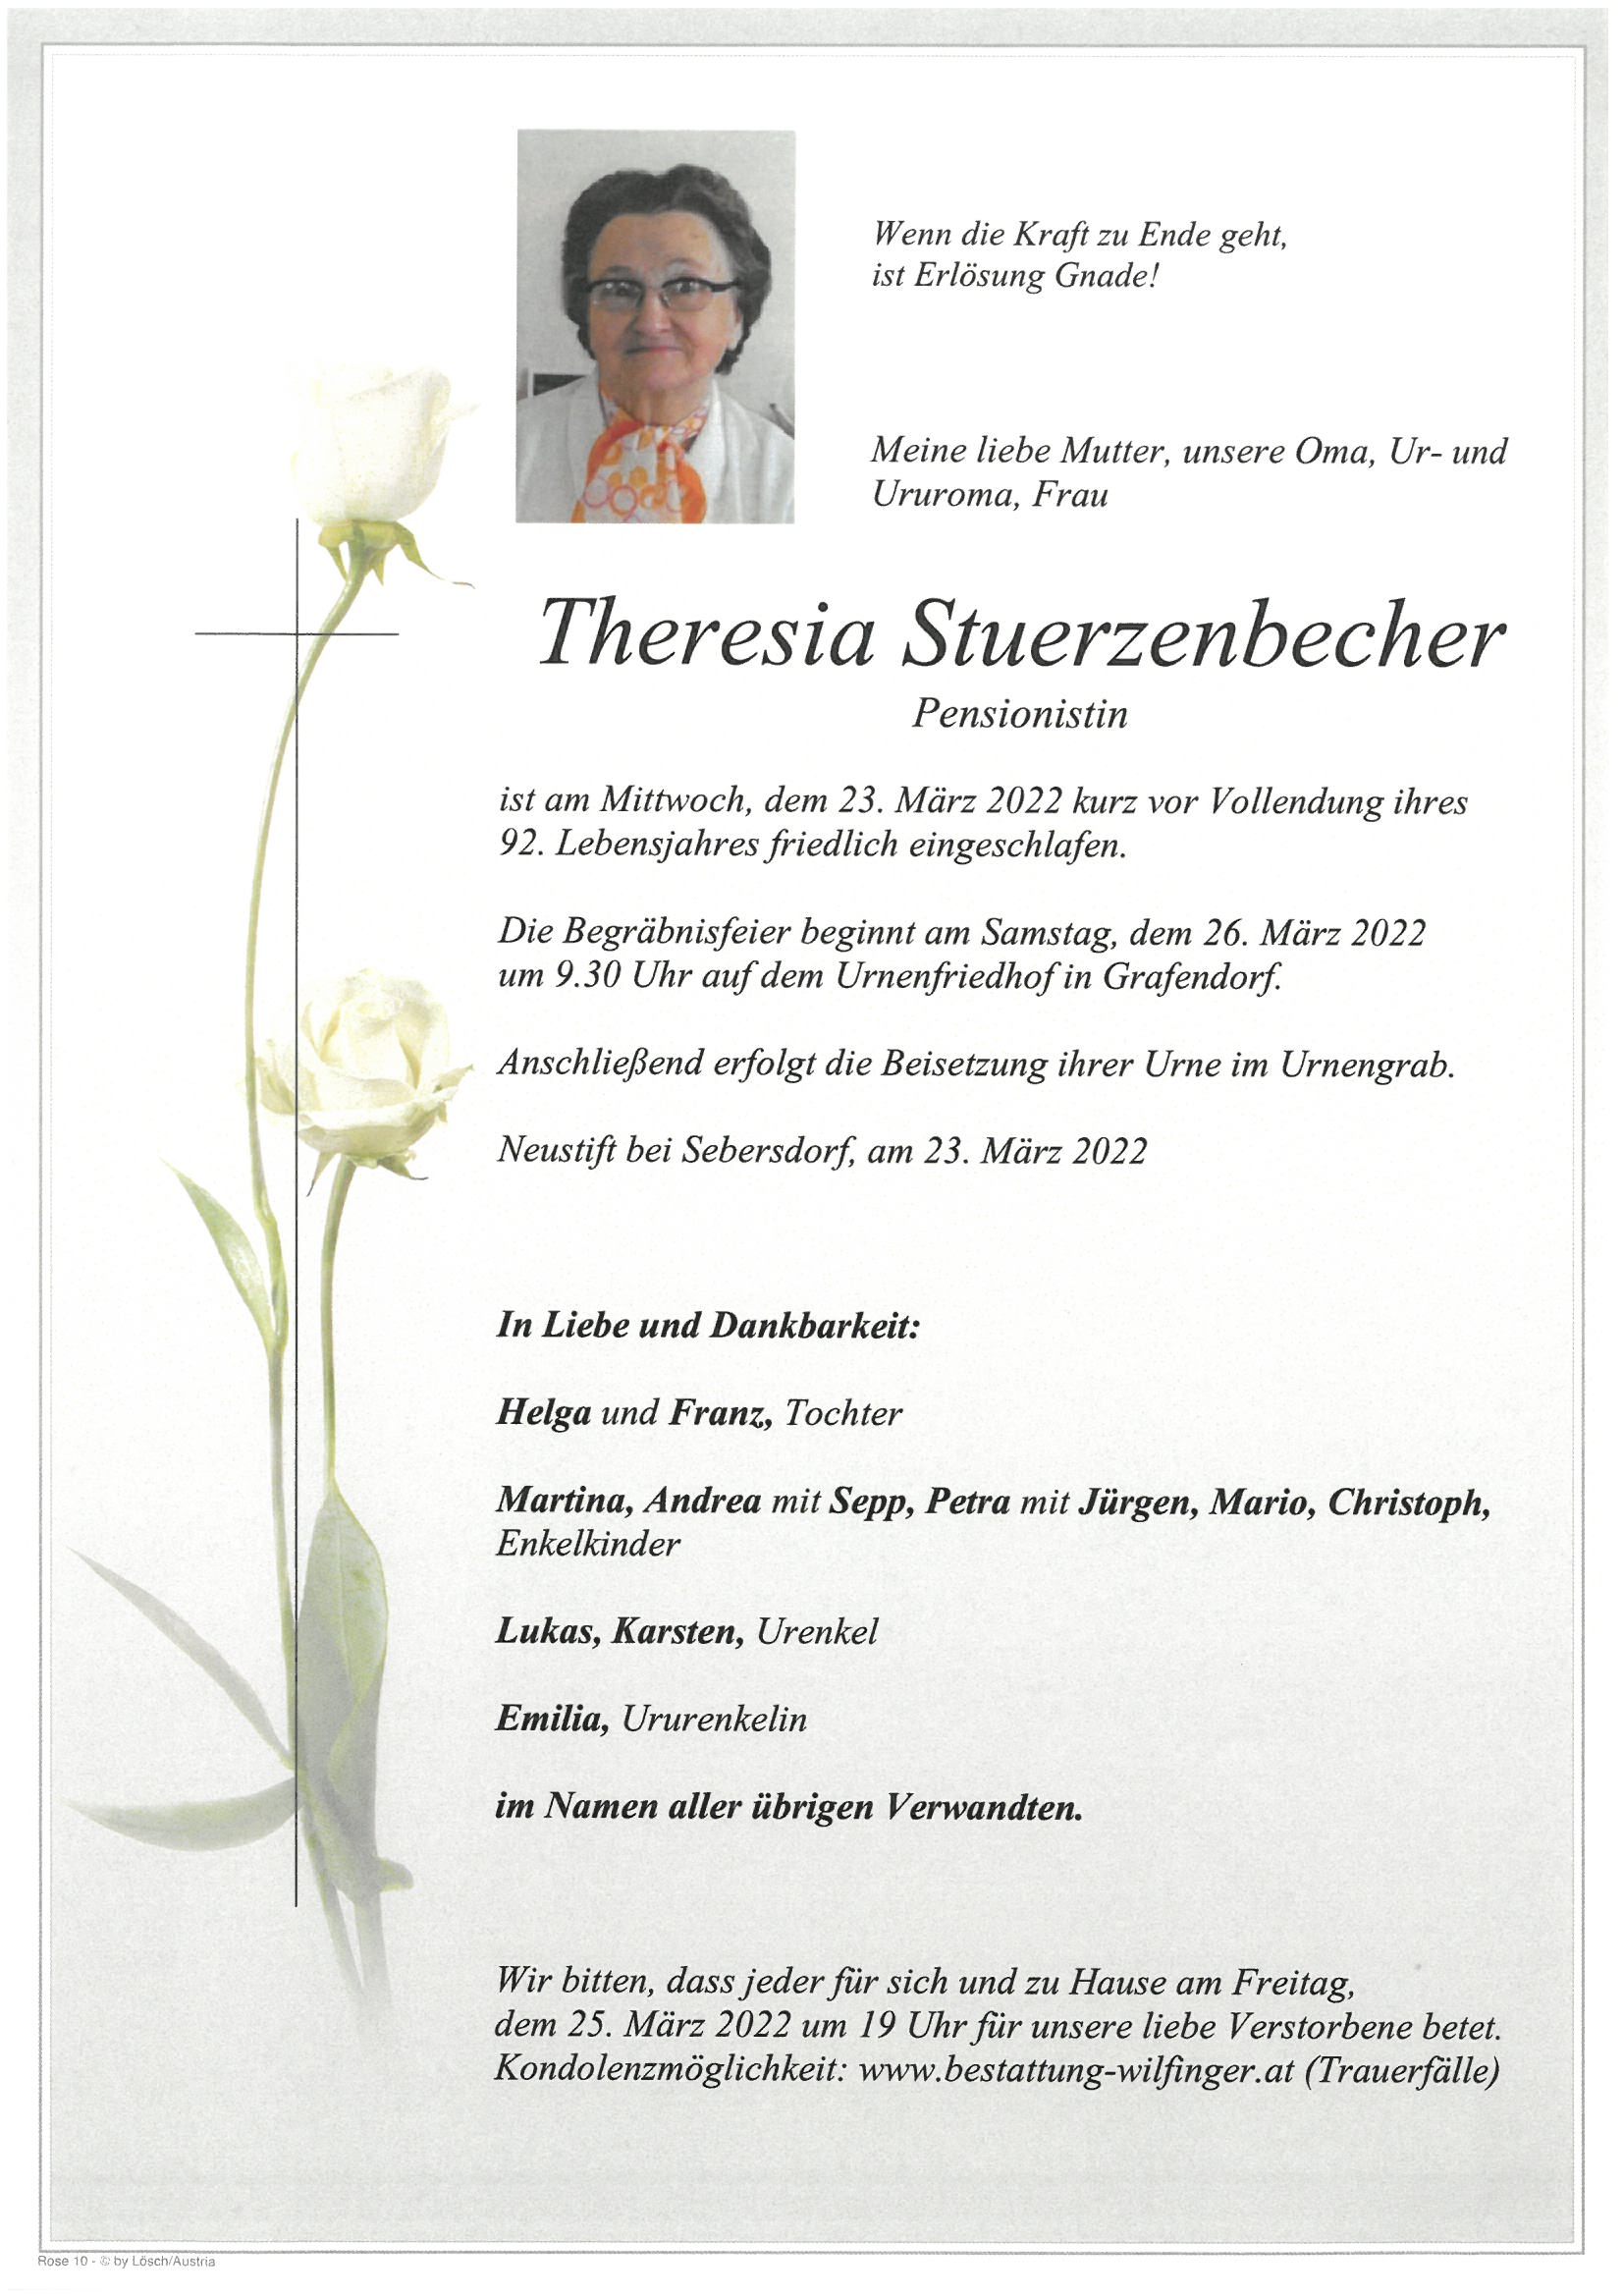 Theresia Stürzenbecher